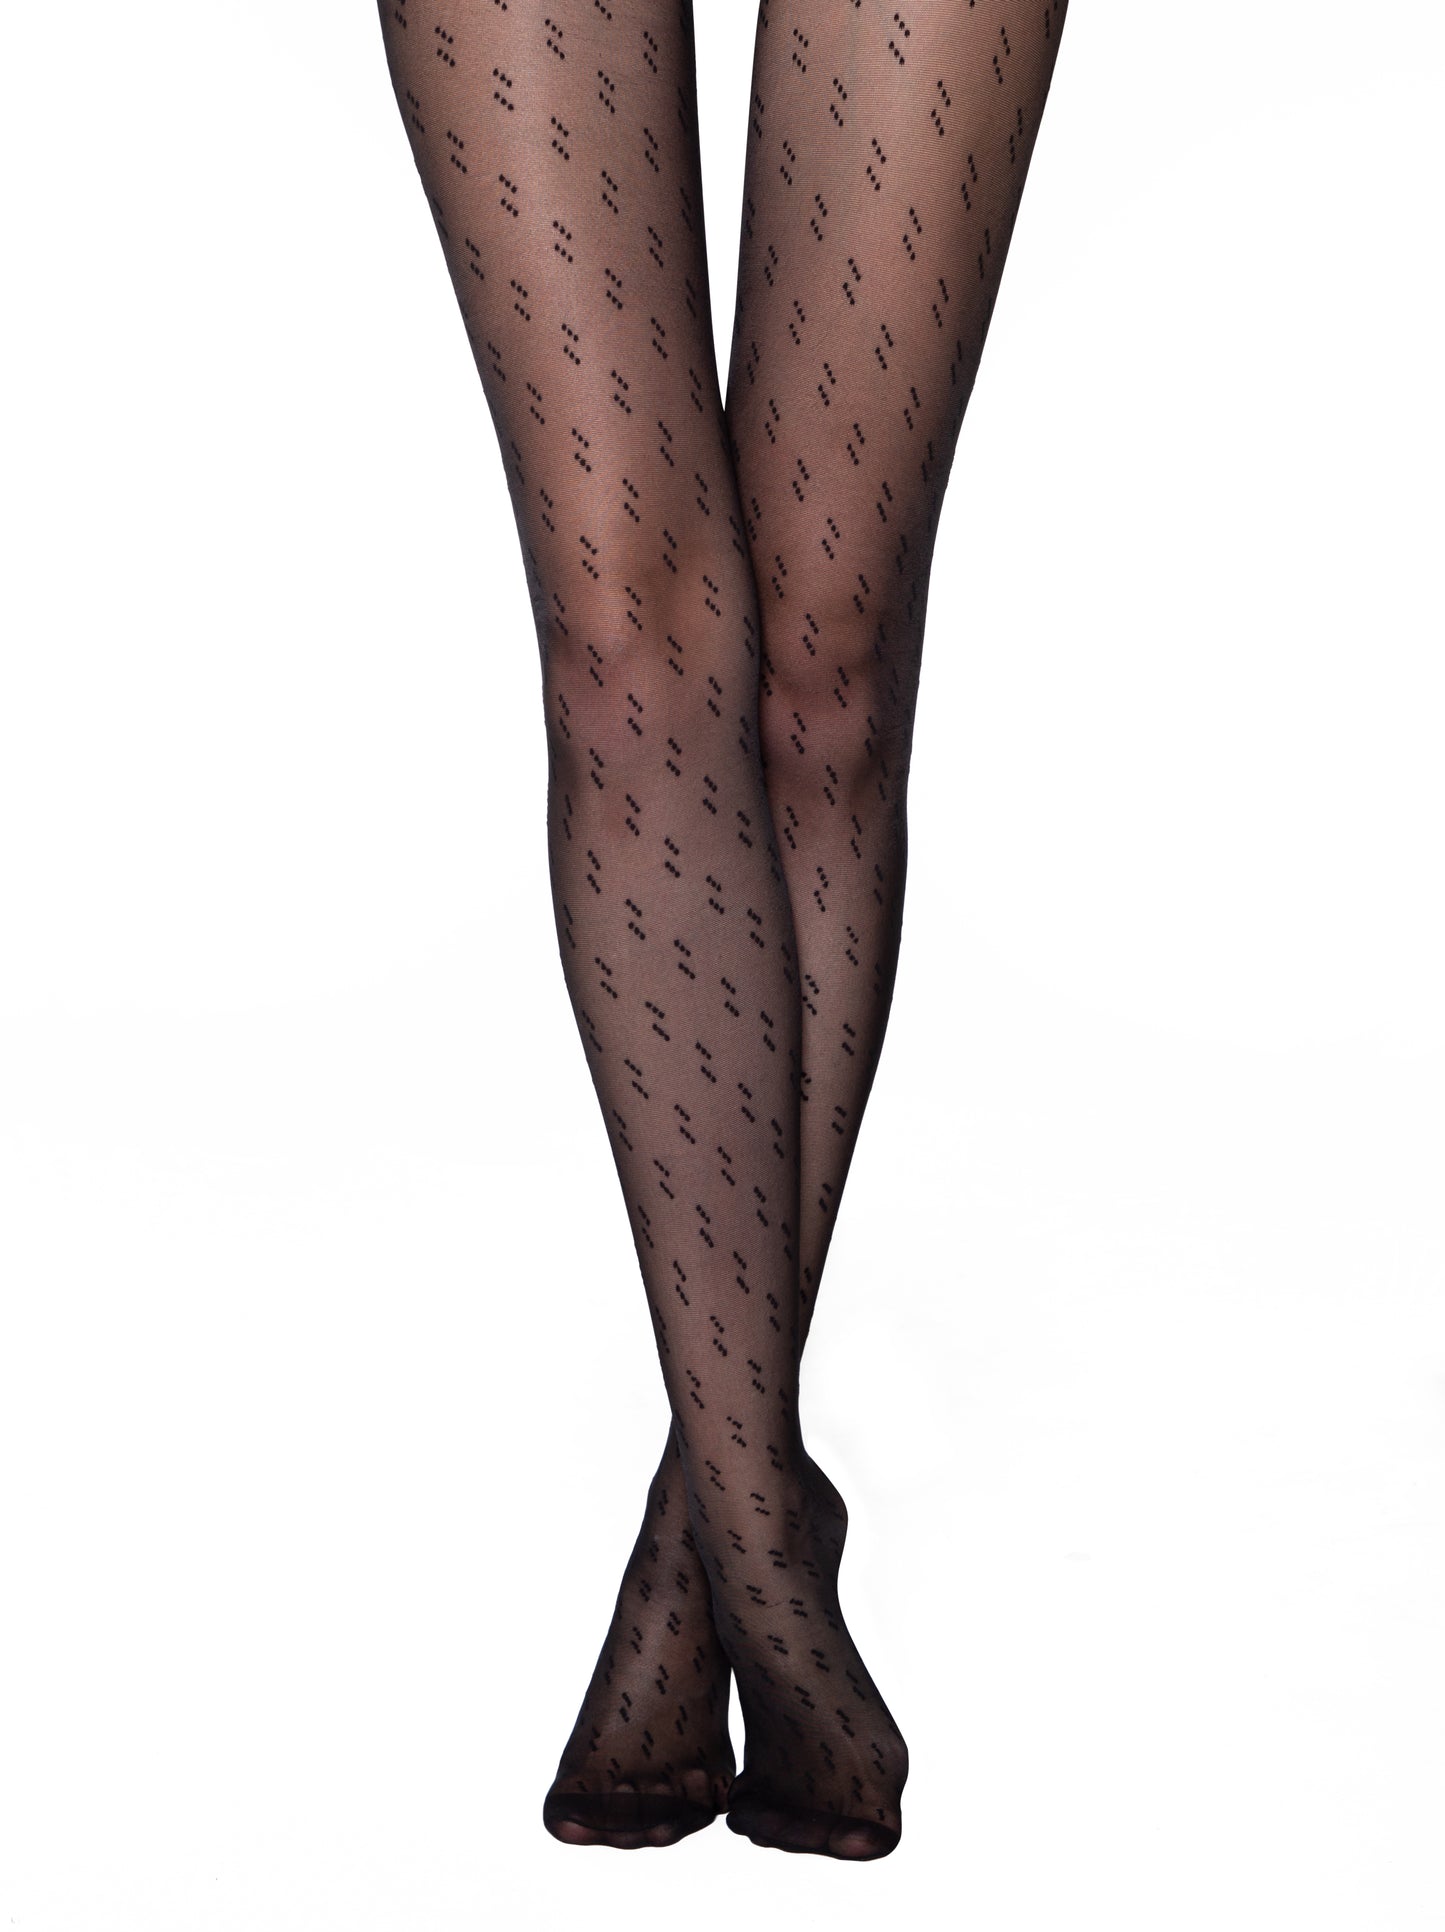 Elegante Strumpfhose mit Glitzer-Muster Patrizia Gucci for Marilyn G48  Marilyn